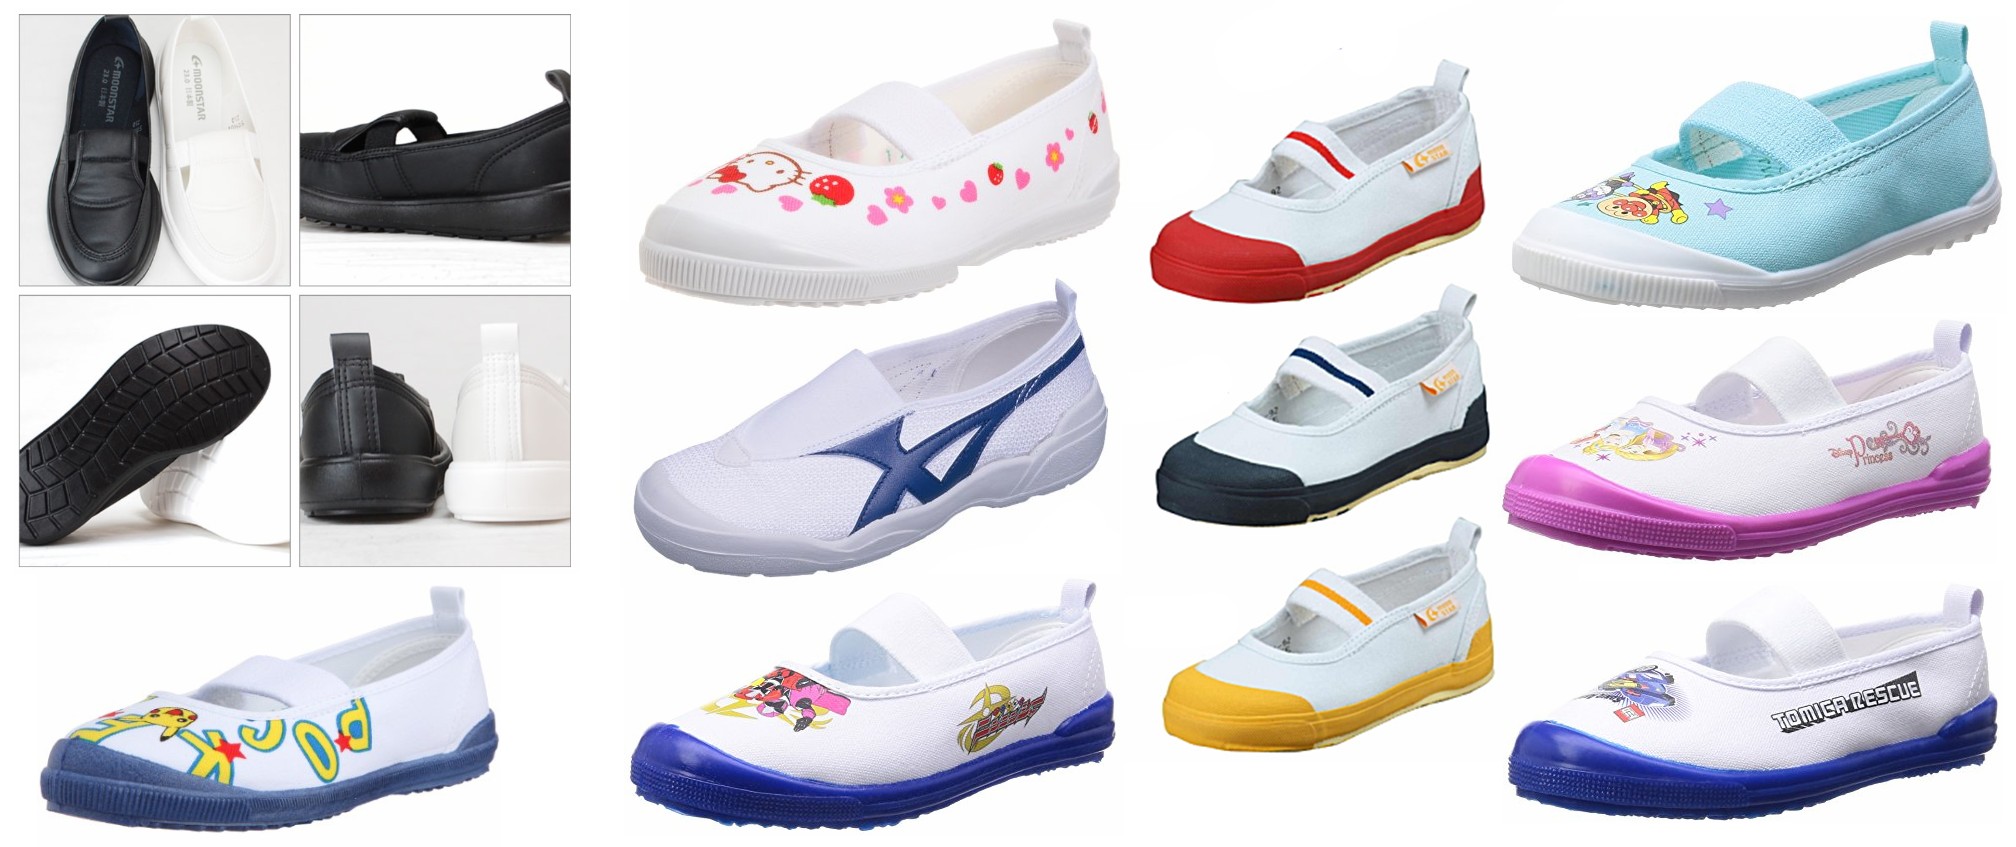 japanese shoe brands